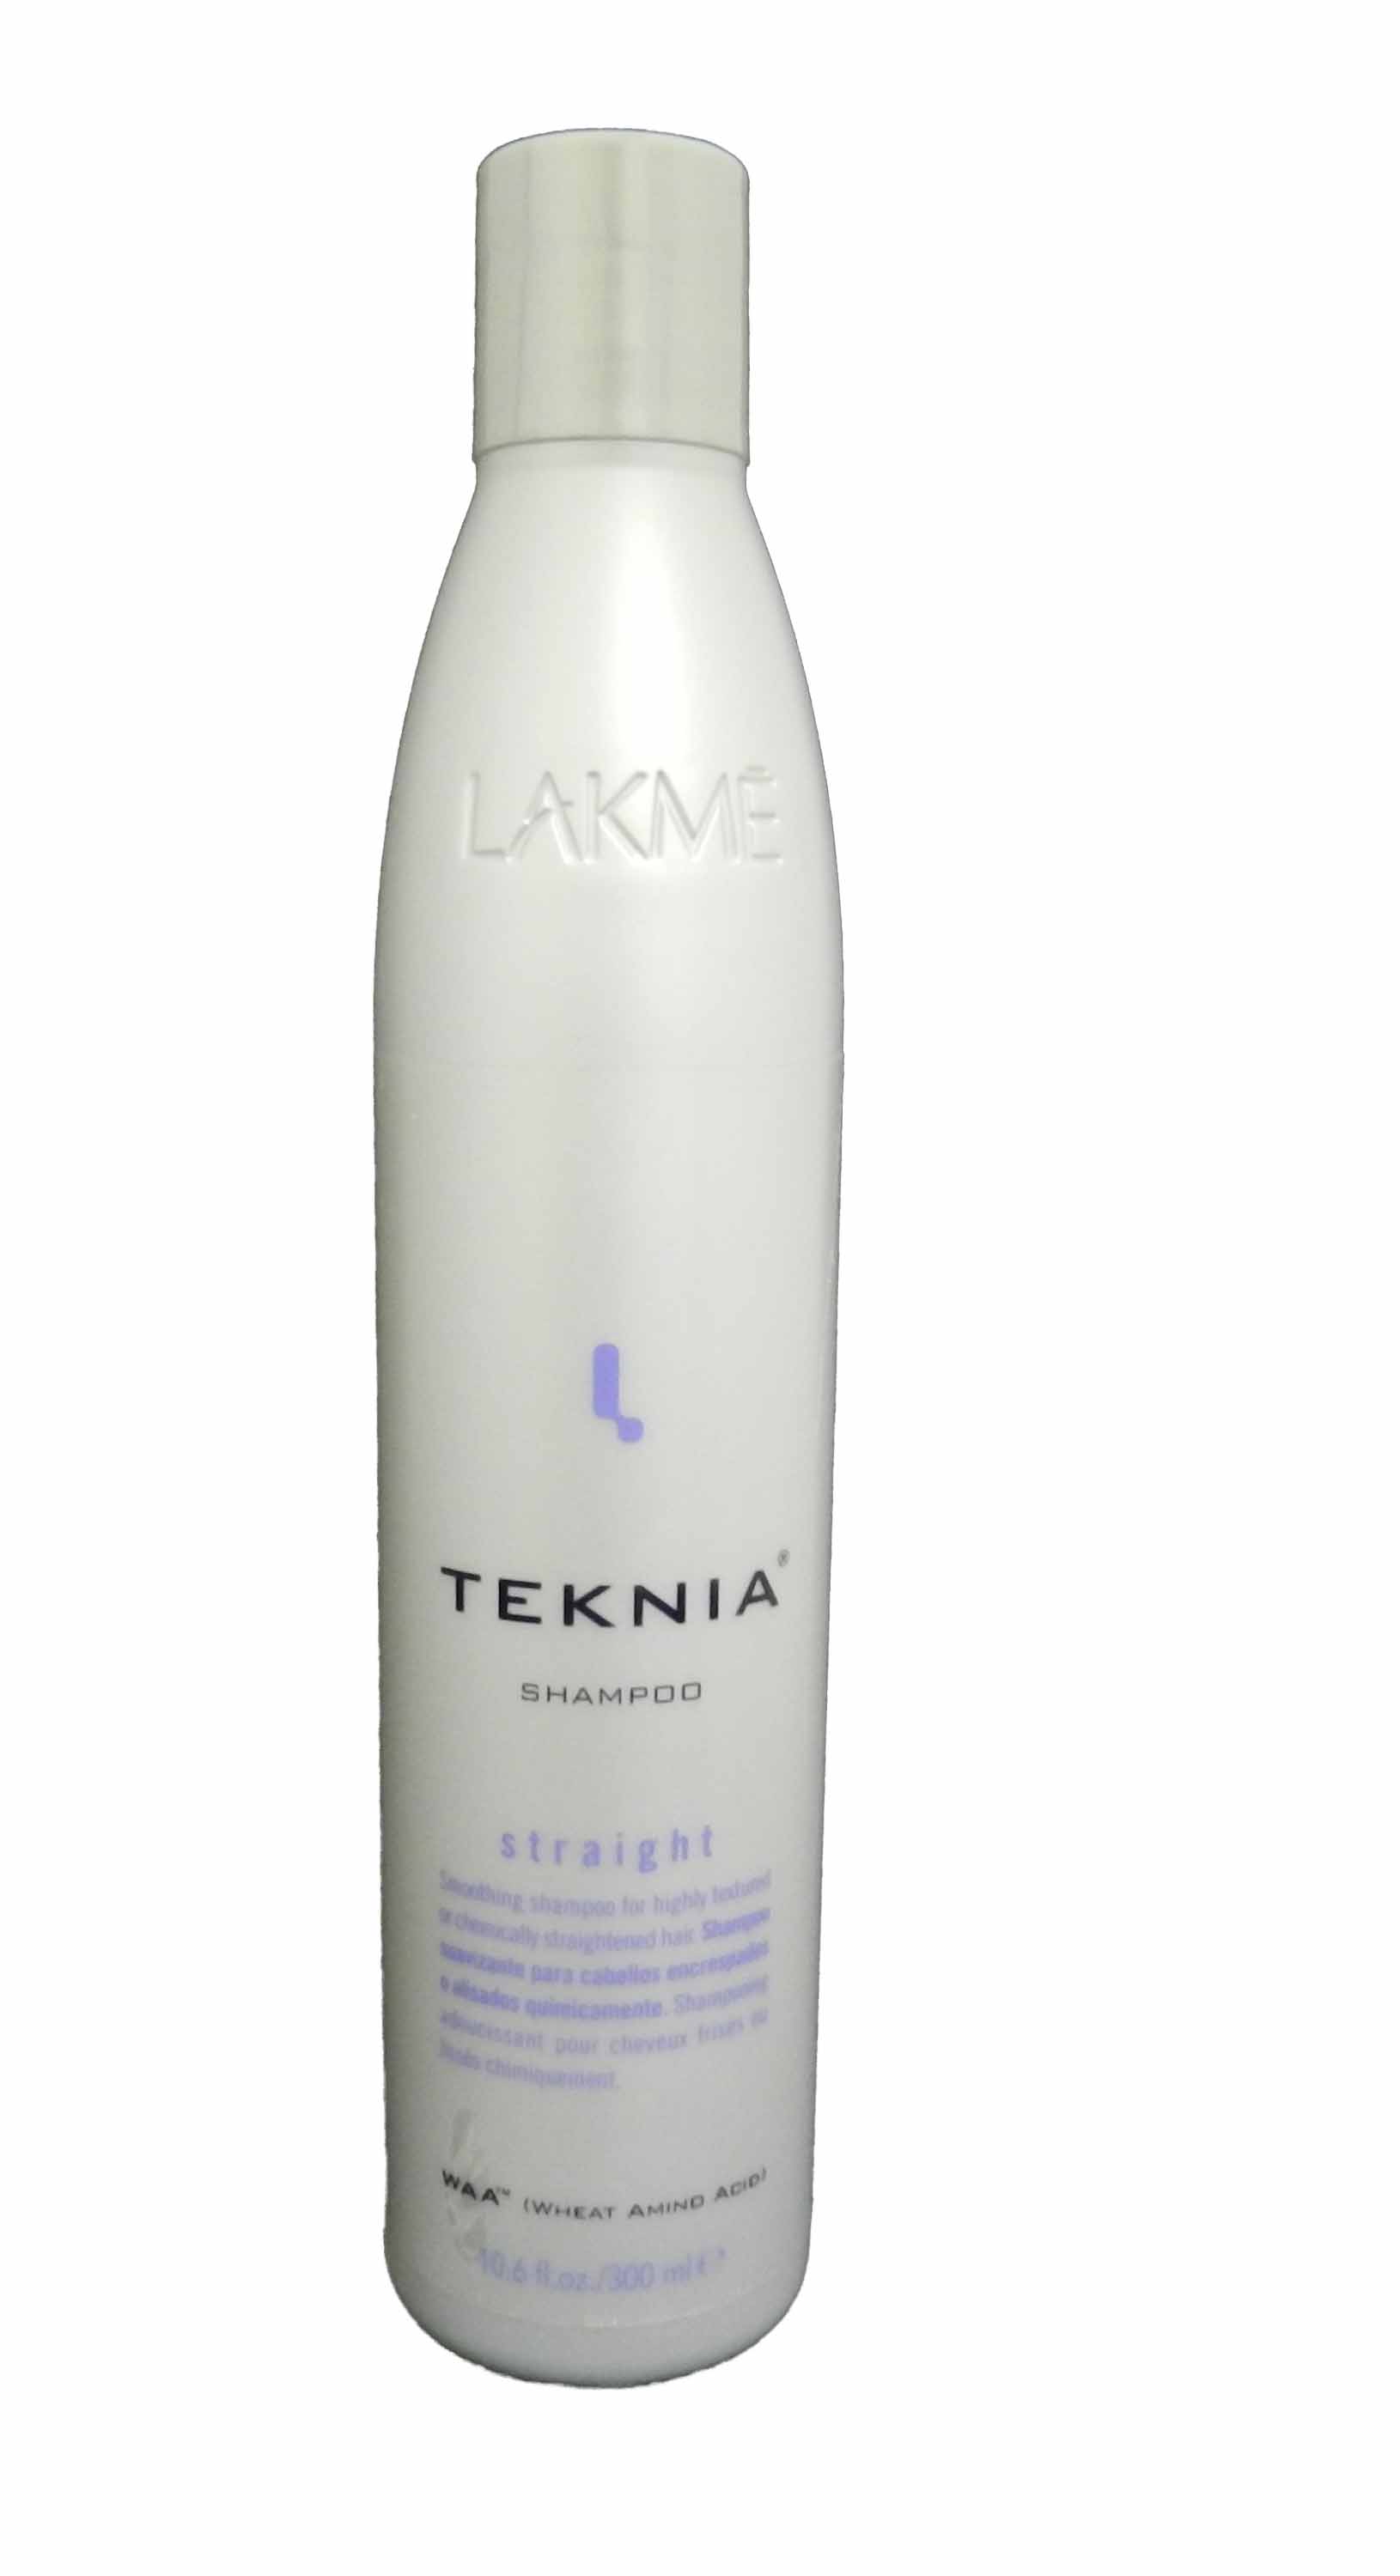 Lakme Teknia Straight Shampoo 10.6 Ounce